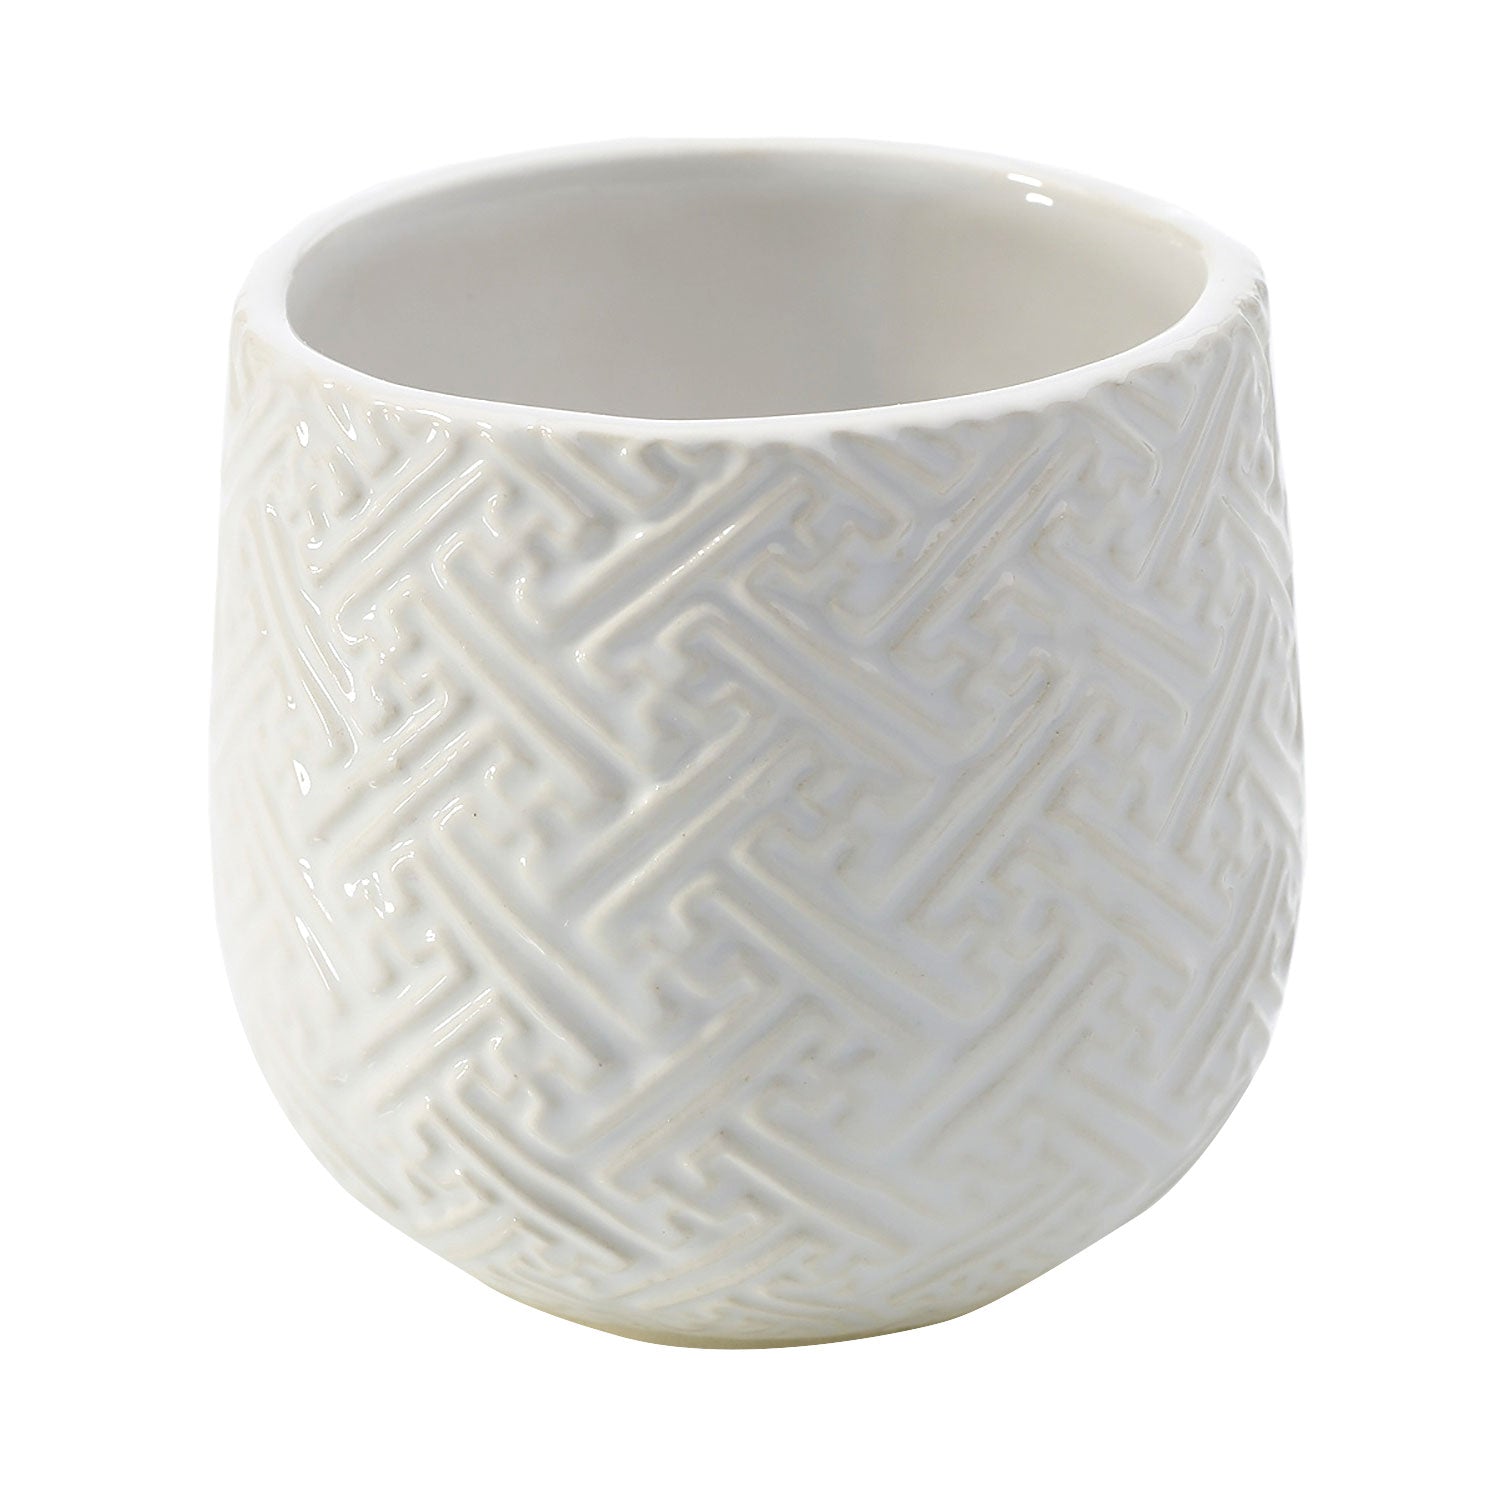 White Kabasa Vintage Pot for sale, Succulent Pot with rustic style, Elegant home decor ideas, Geometric ceramic pot for succulent and cactus, Small Flower pot for sale